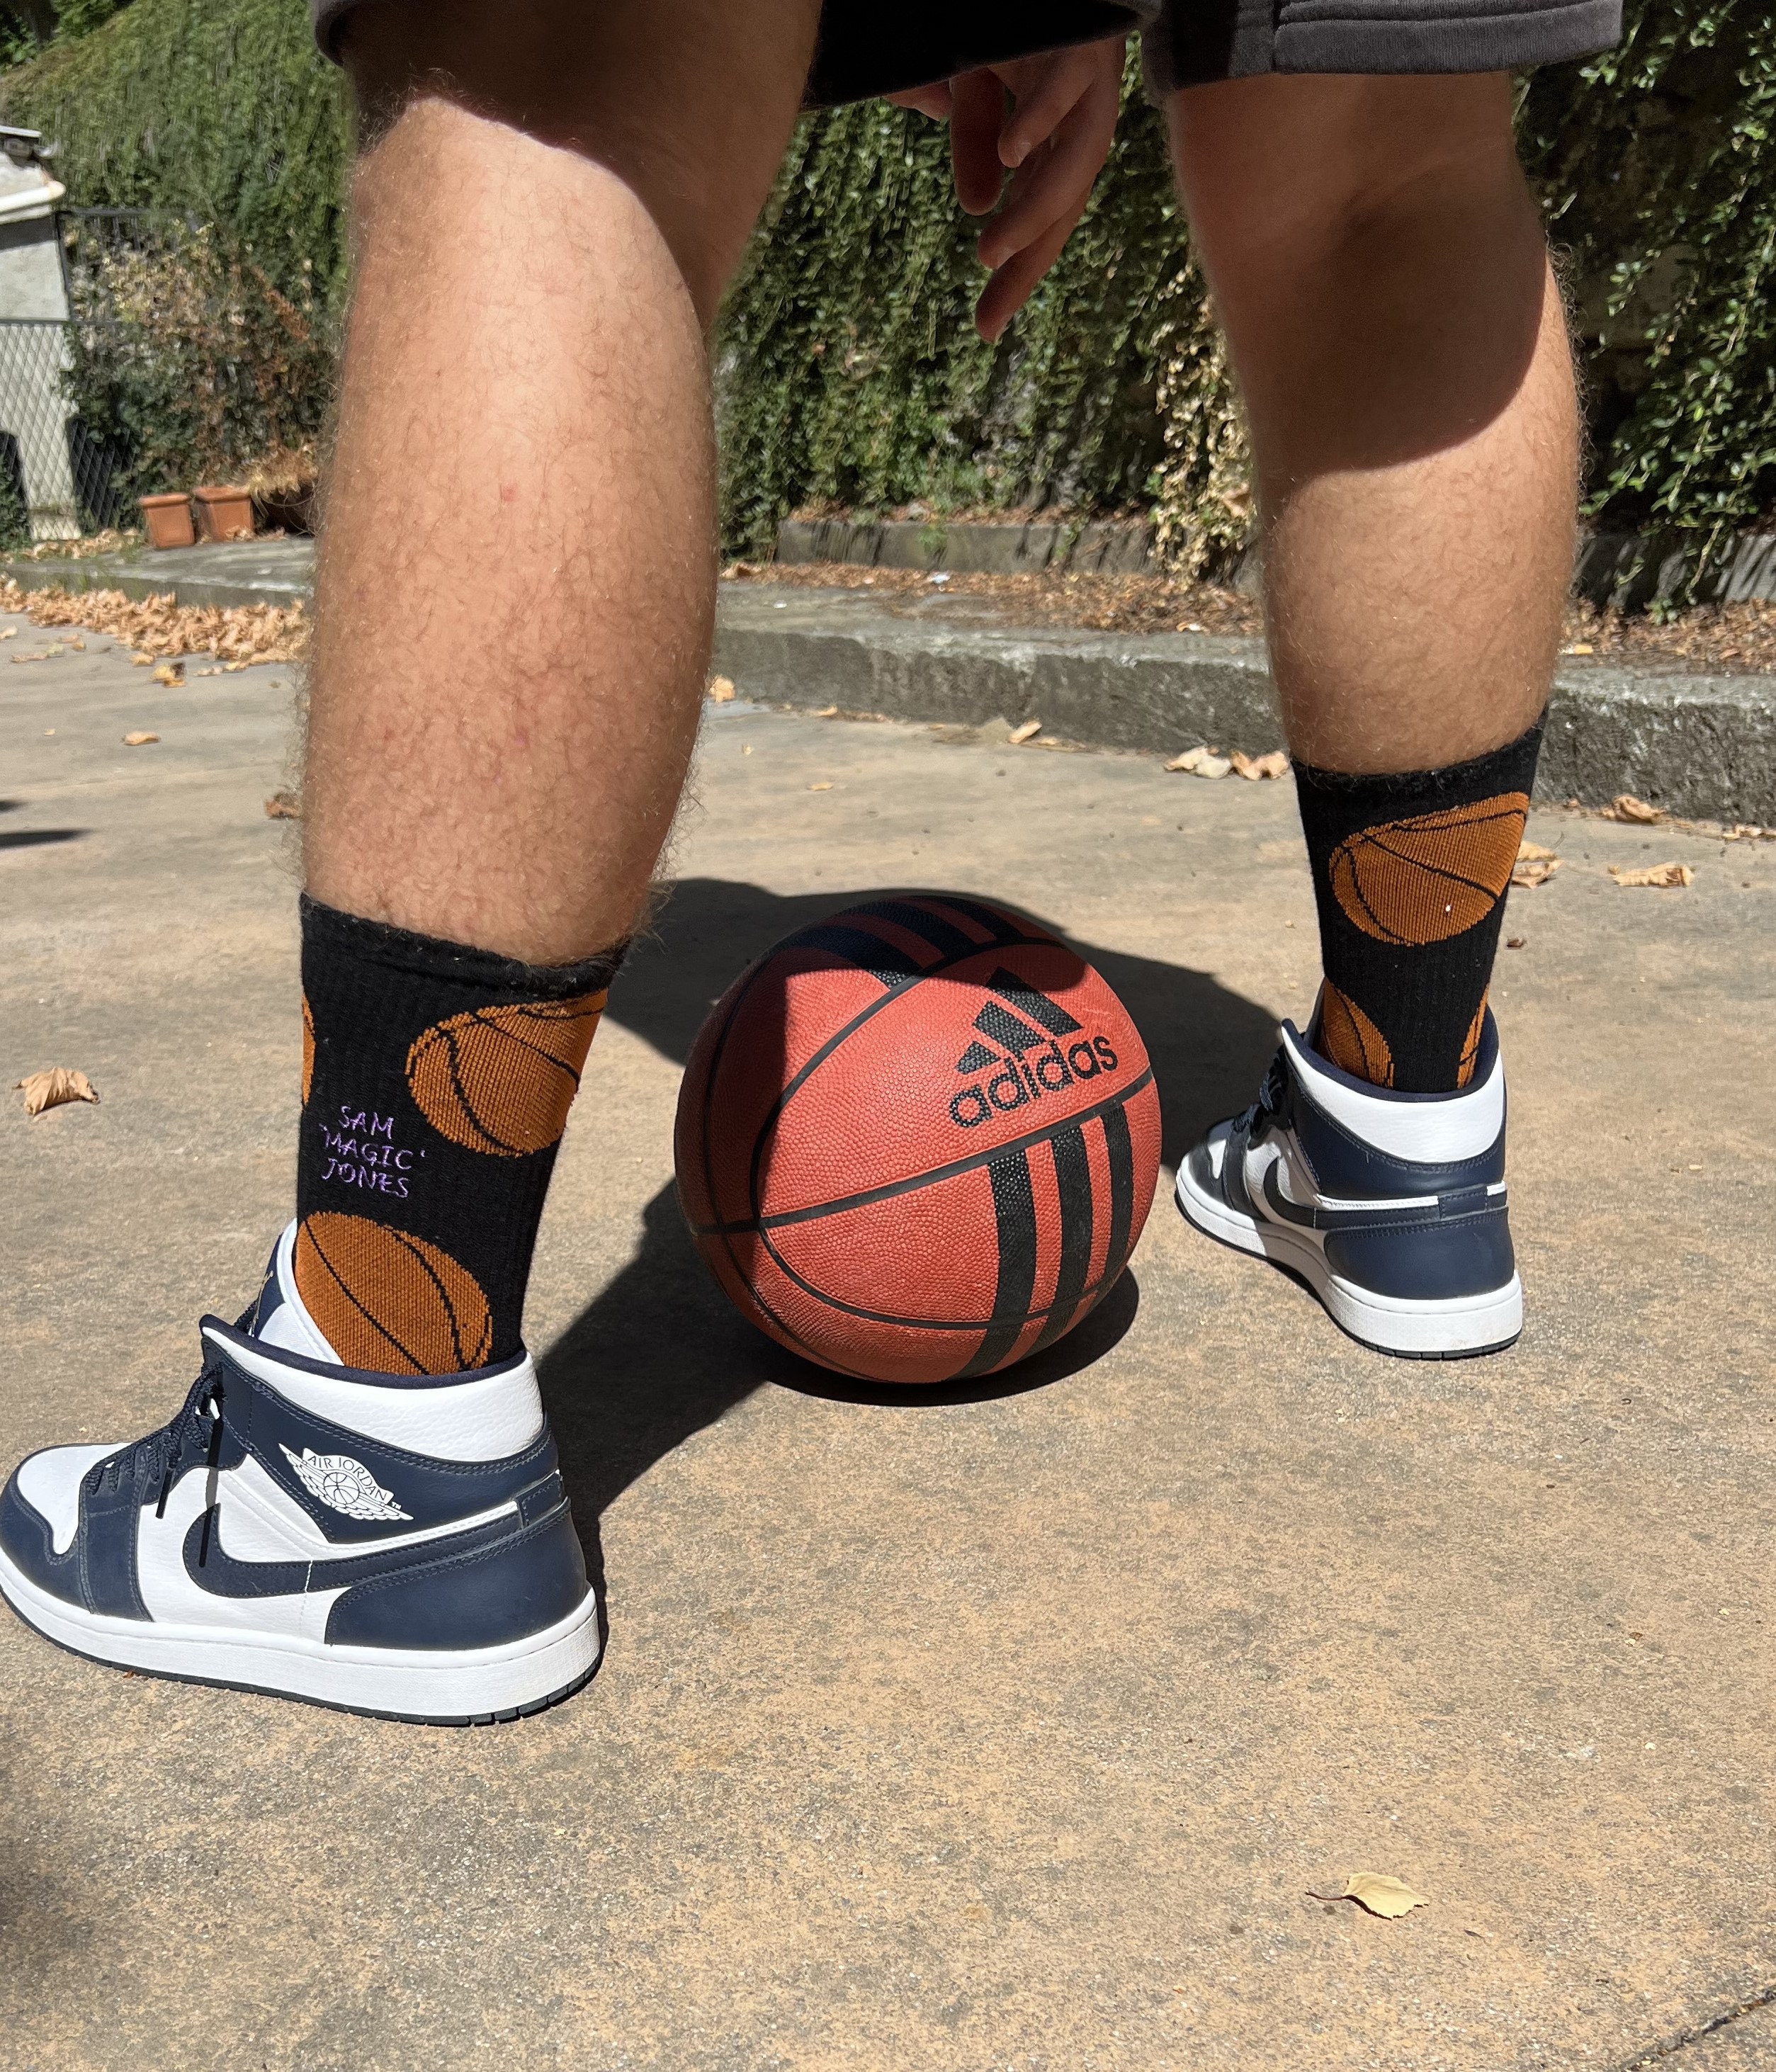 Chaussettes de sport rigolotes Basketball